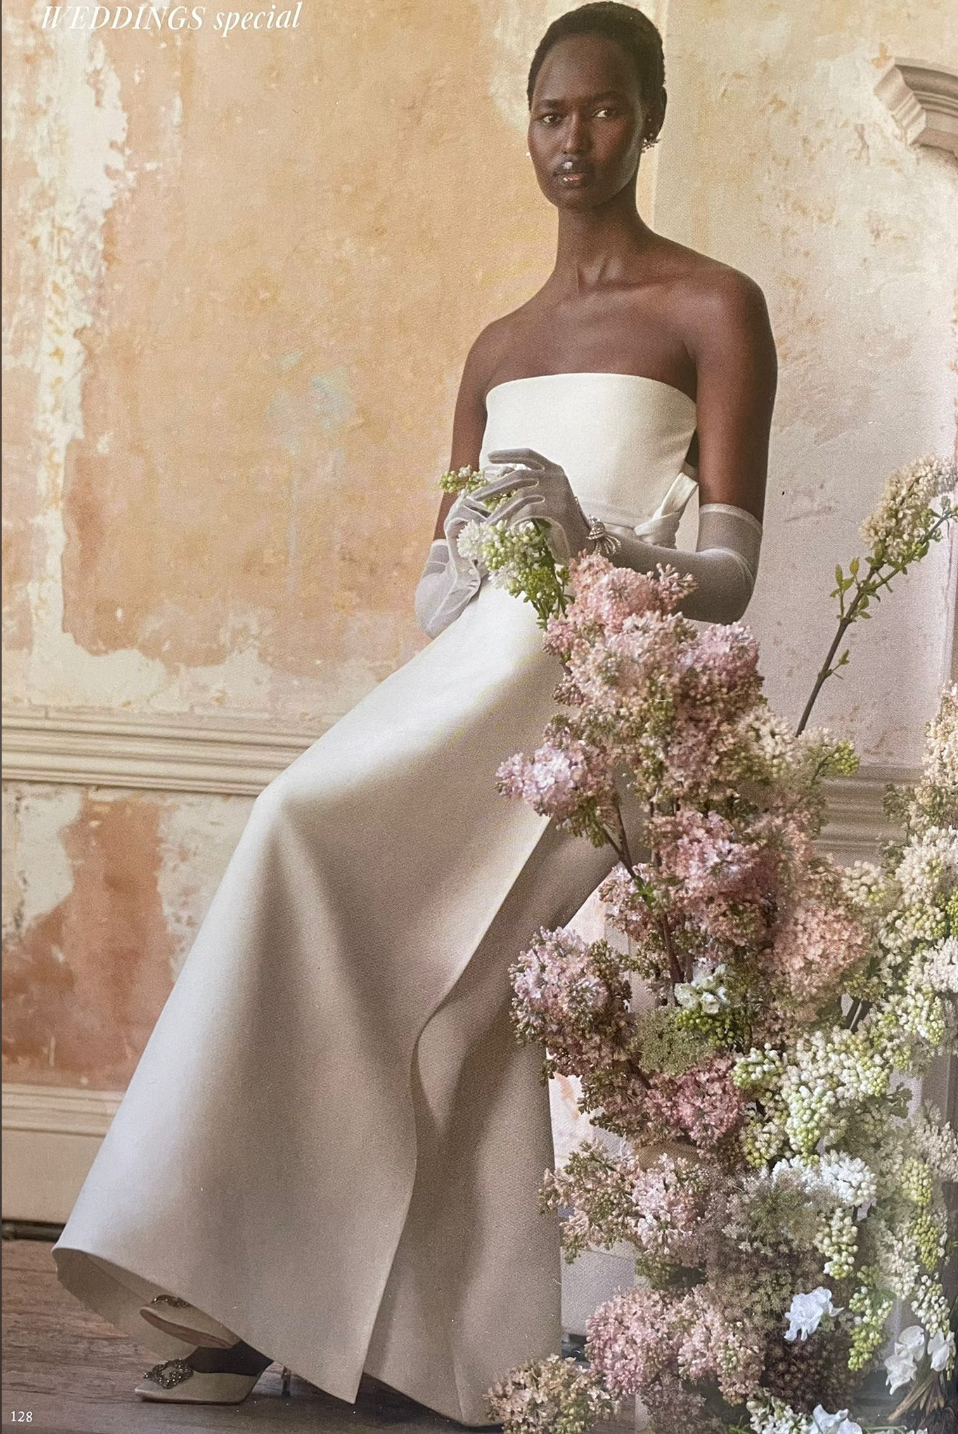 Weddings Special | Vogue, April 2022-Cornelia James